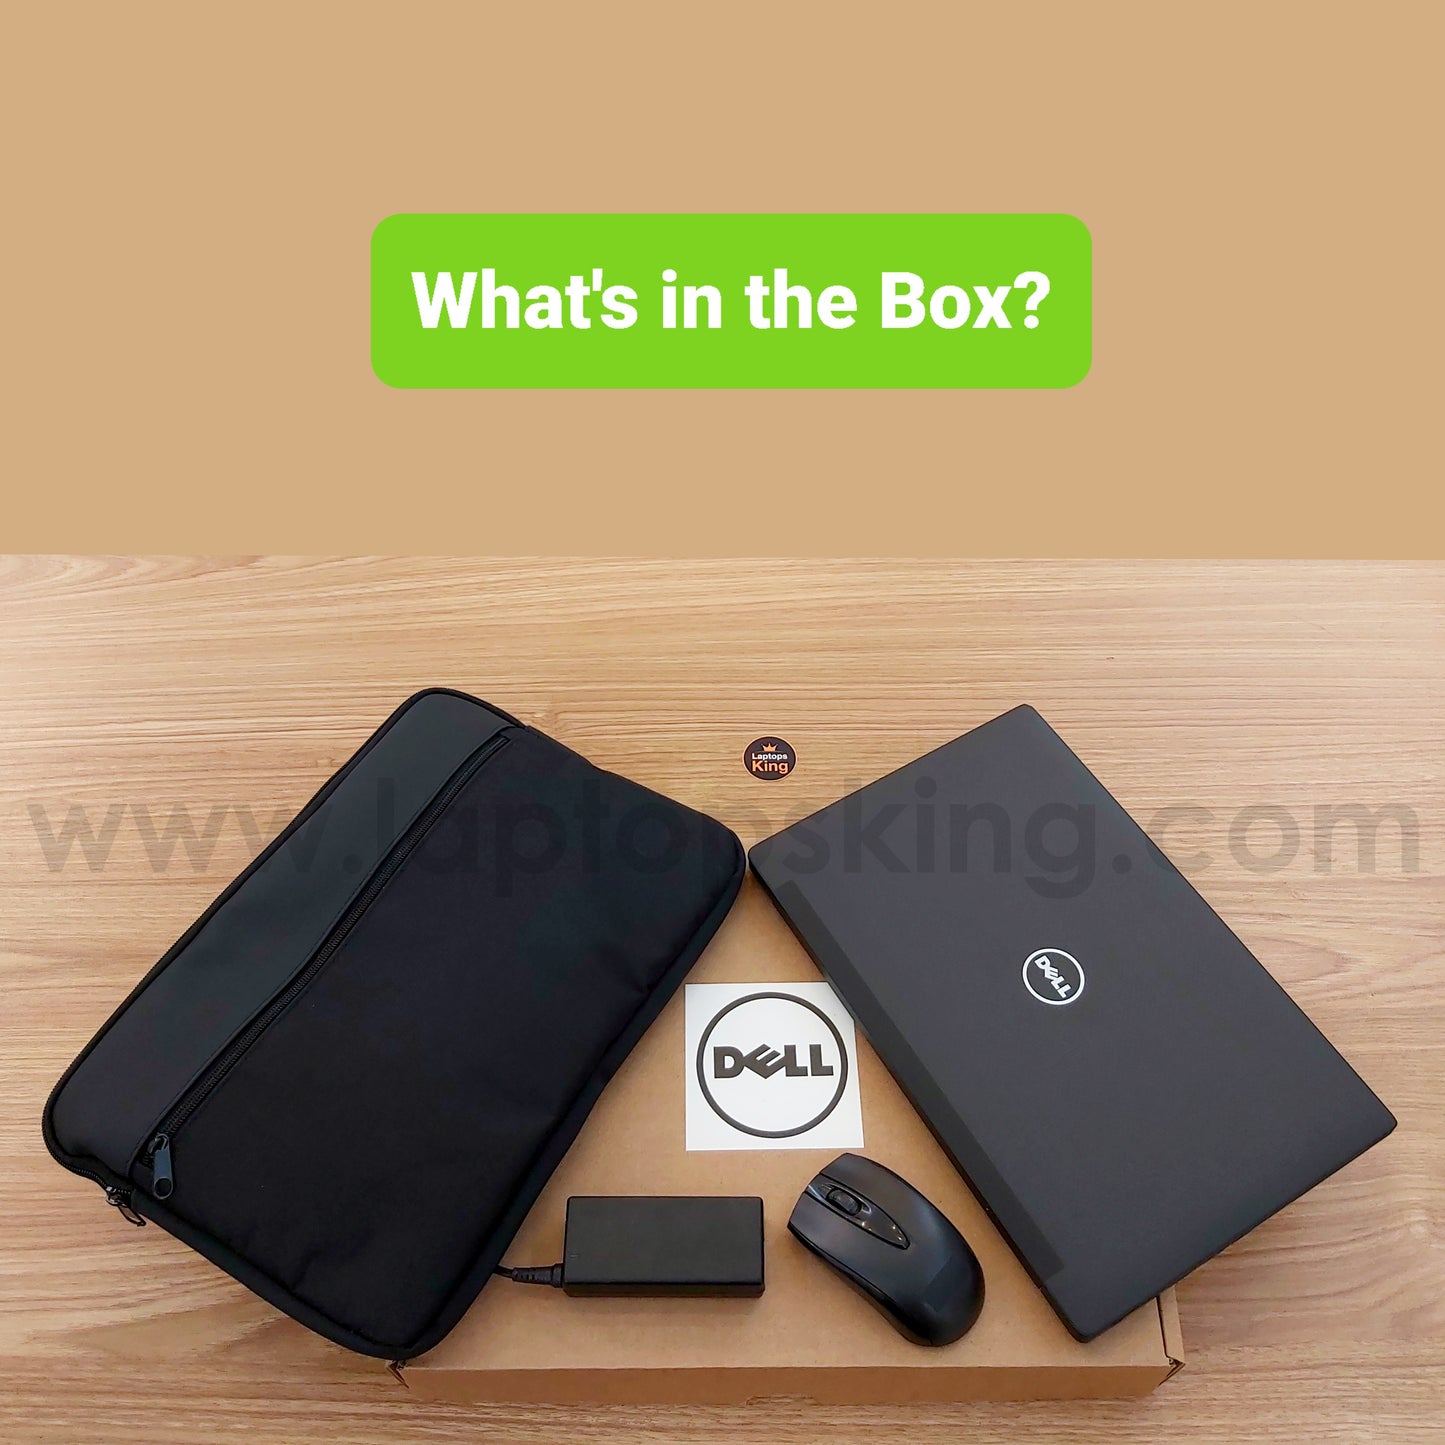 Dell Latitude 7480 i7-7600u 14" 2K Touchscreen Laptop (Open Box)